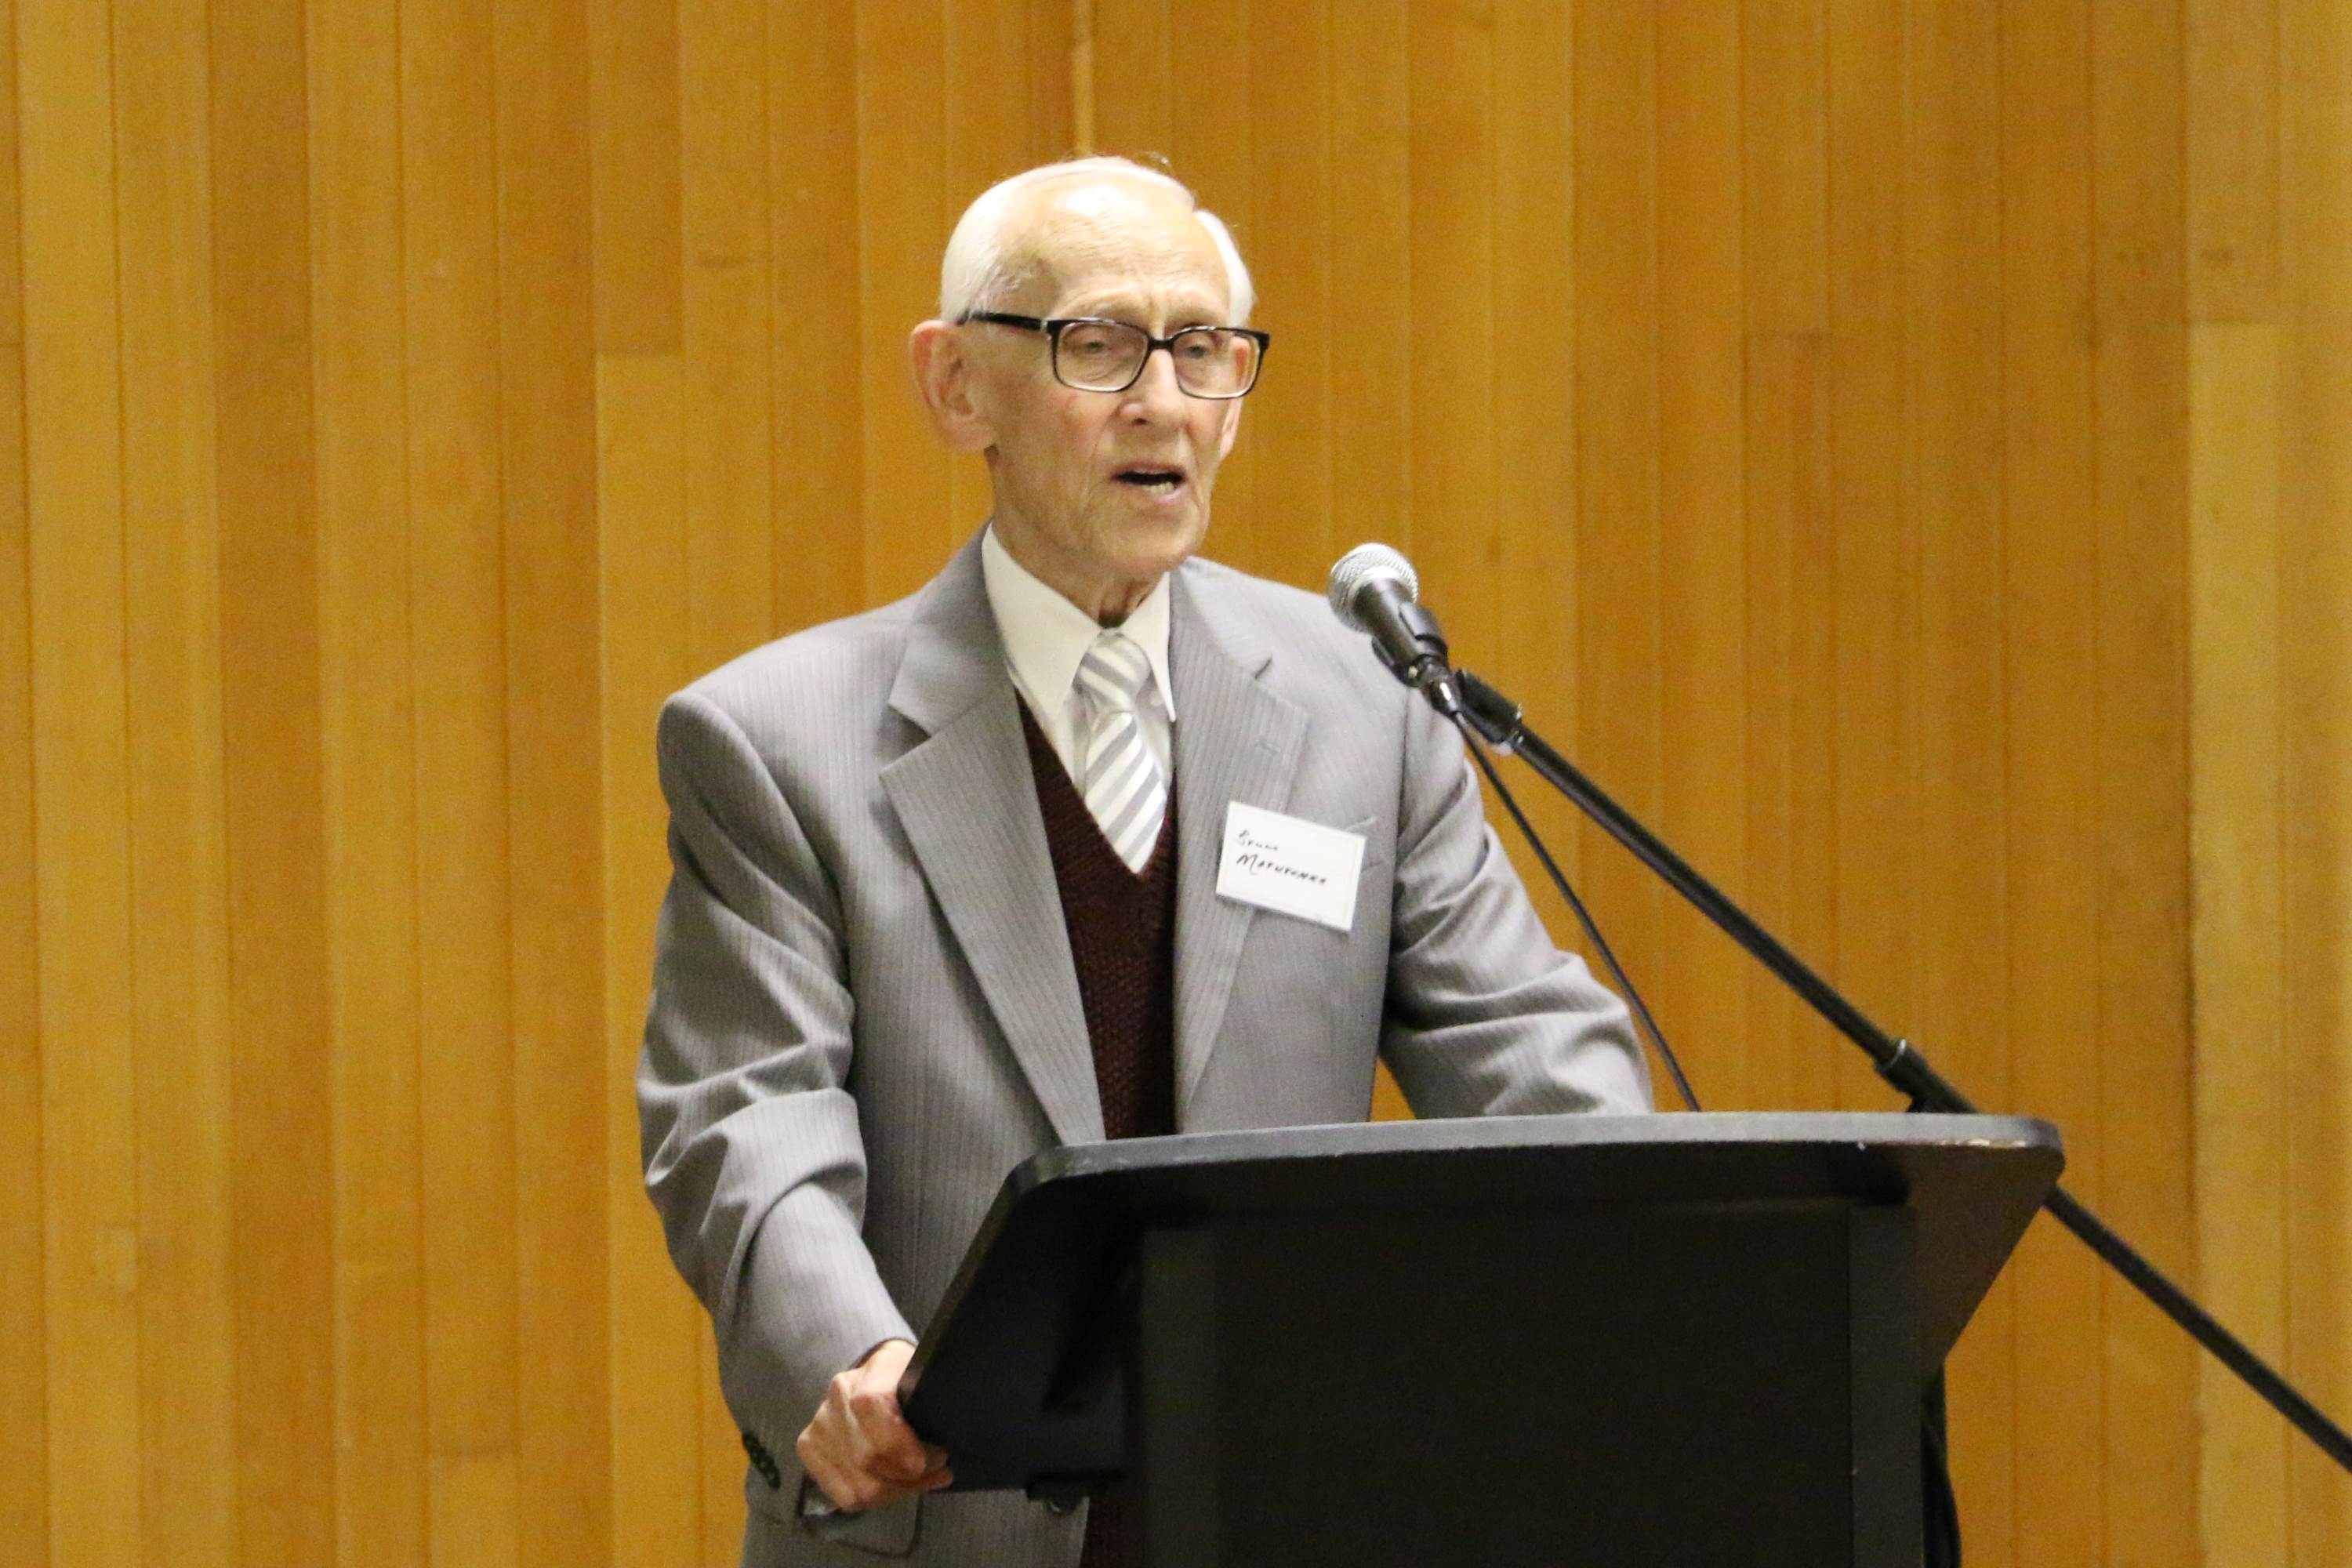 Mr Bruno Matuschka speaking at the 60th Anniversary Dinner in November 2018.